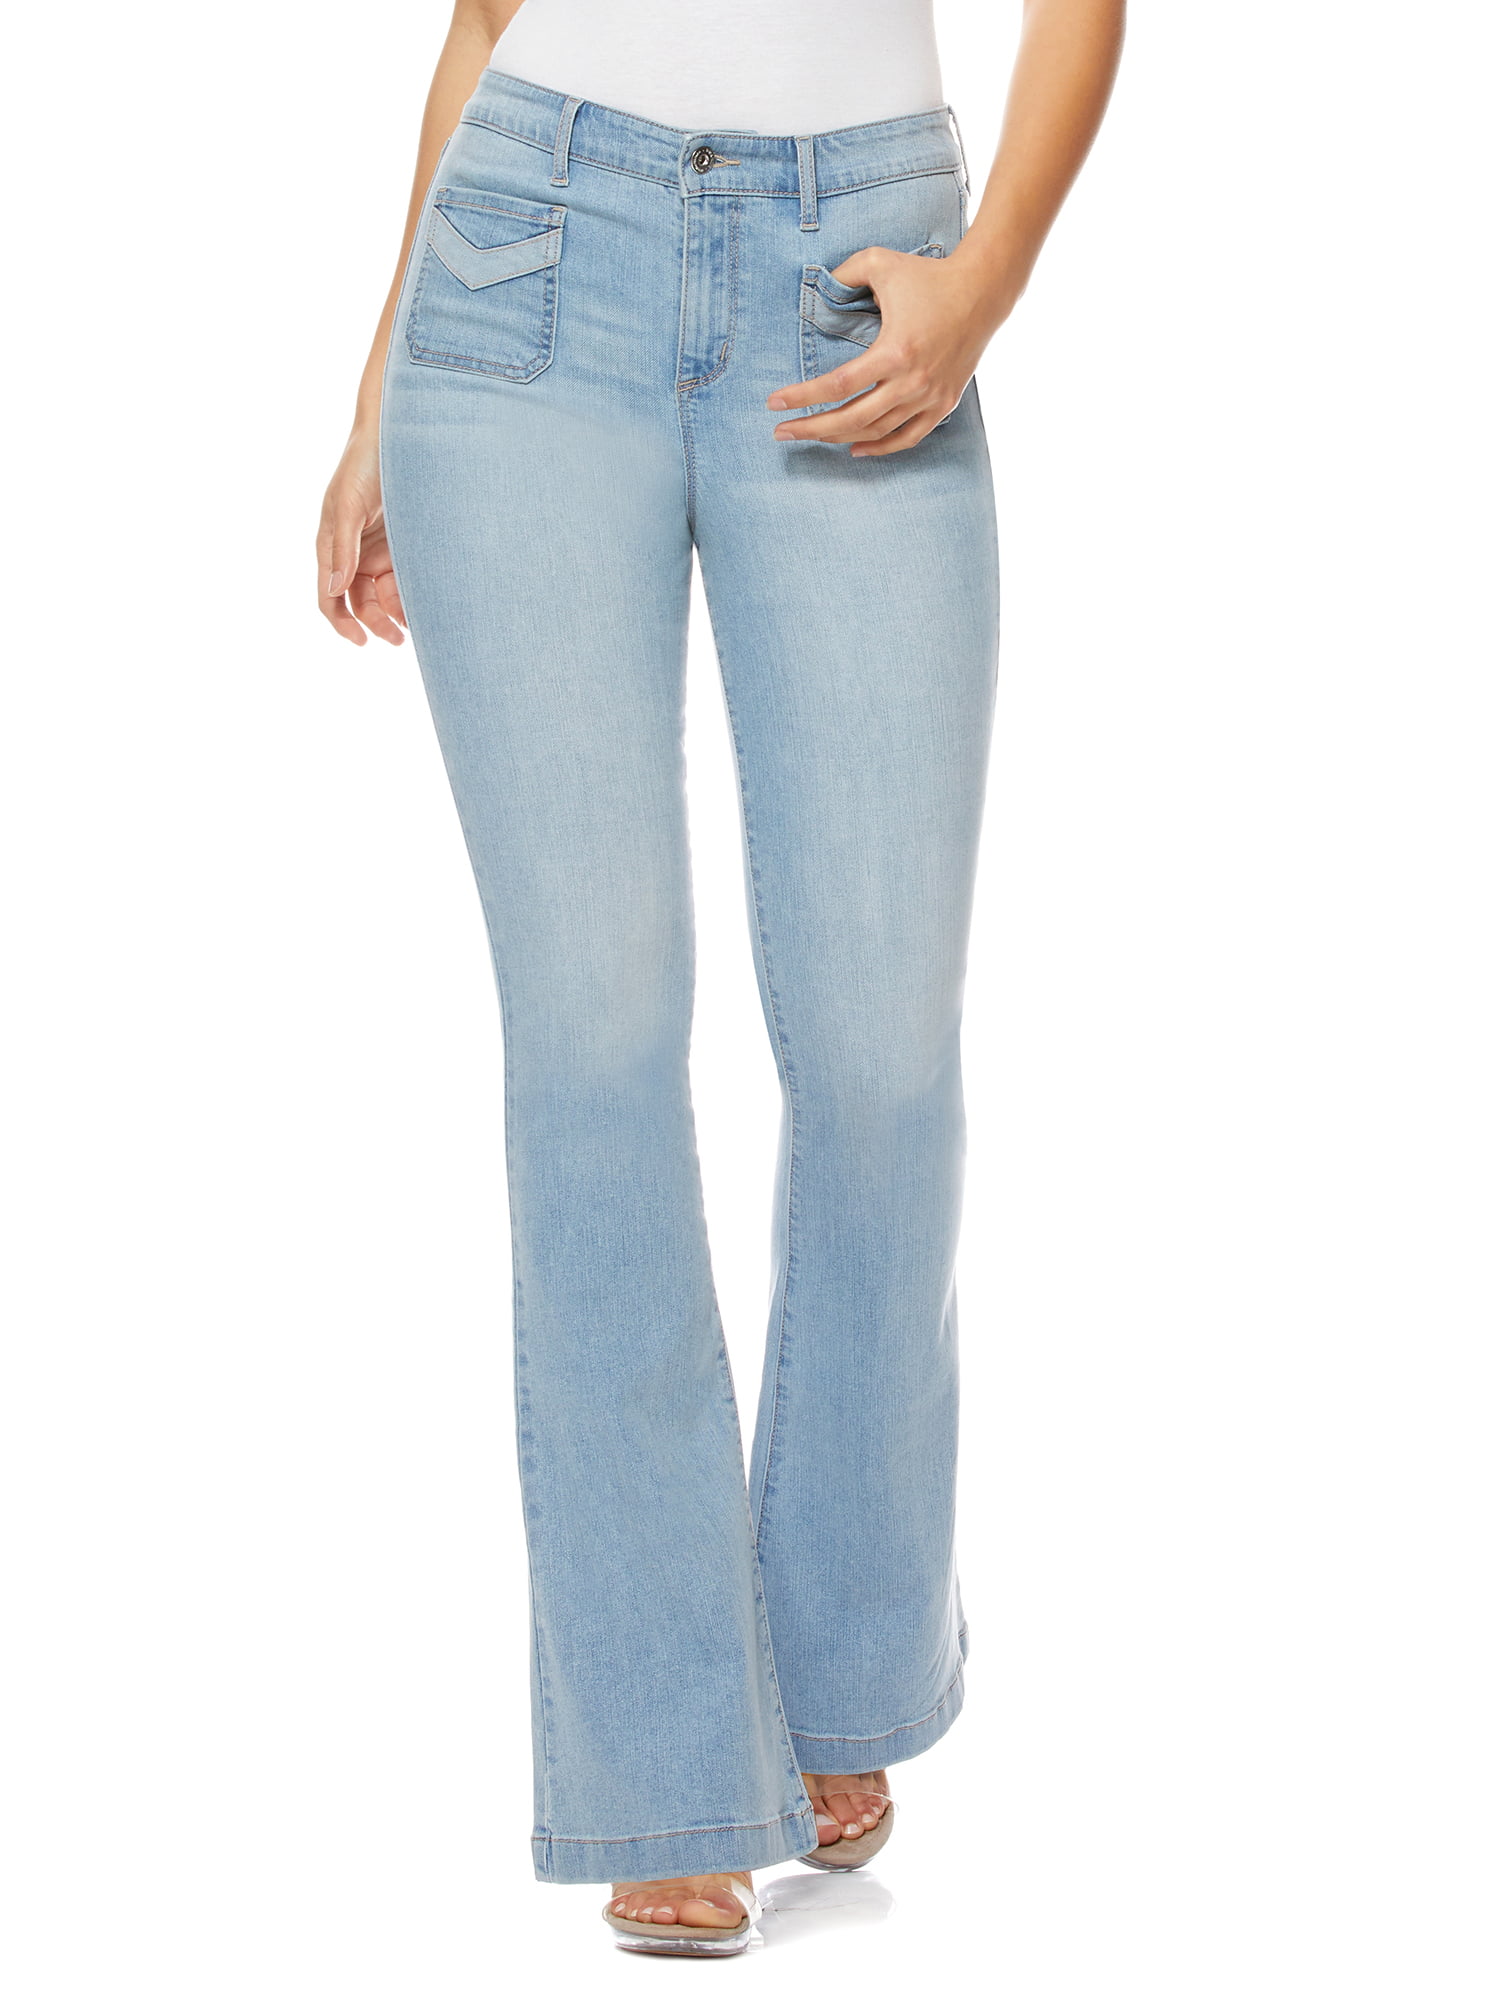 Sofia Jeans Alexa Flare High Waist Front Pocket Stretch Short Jean ...